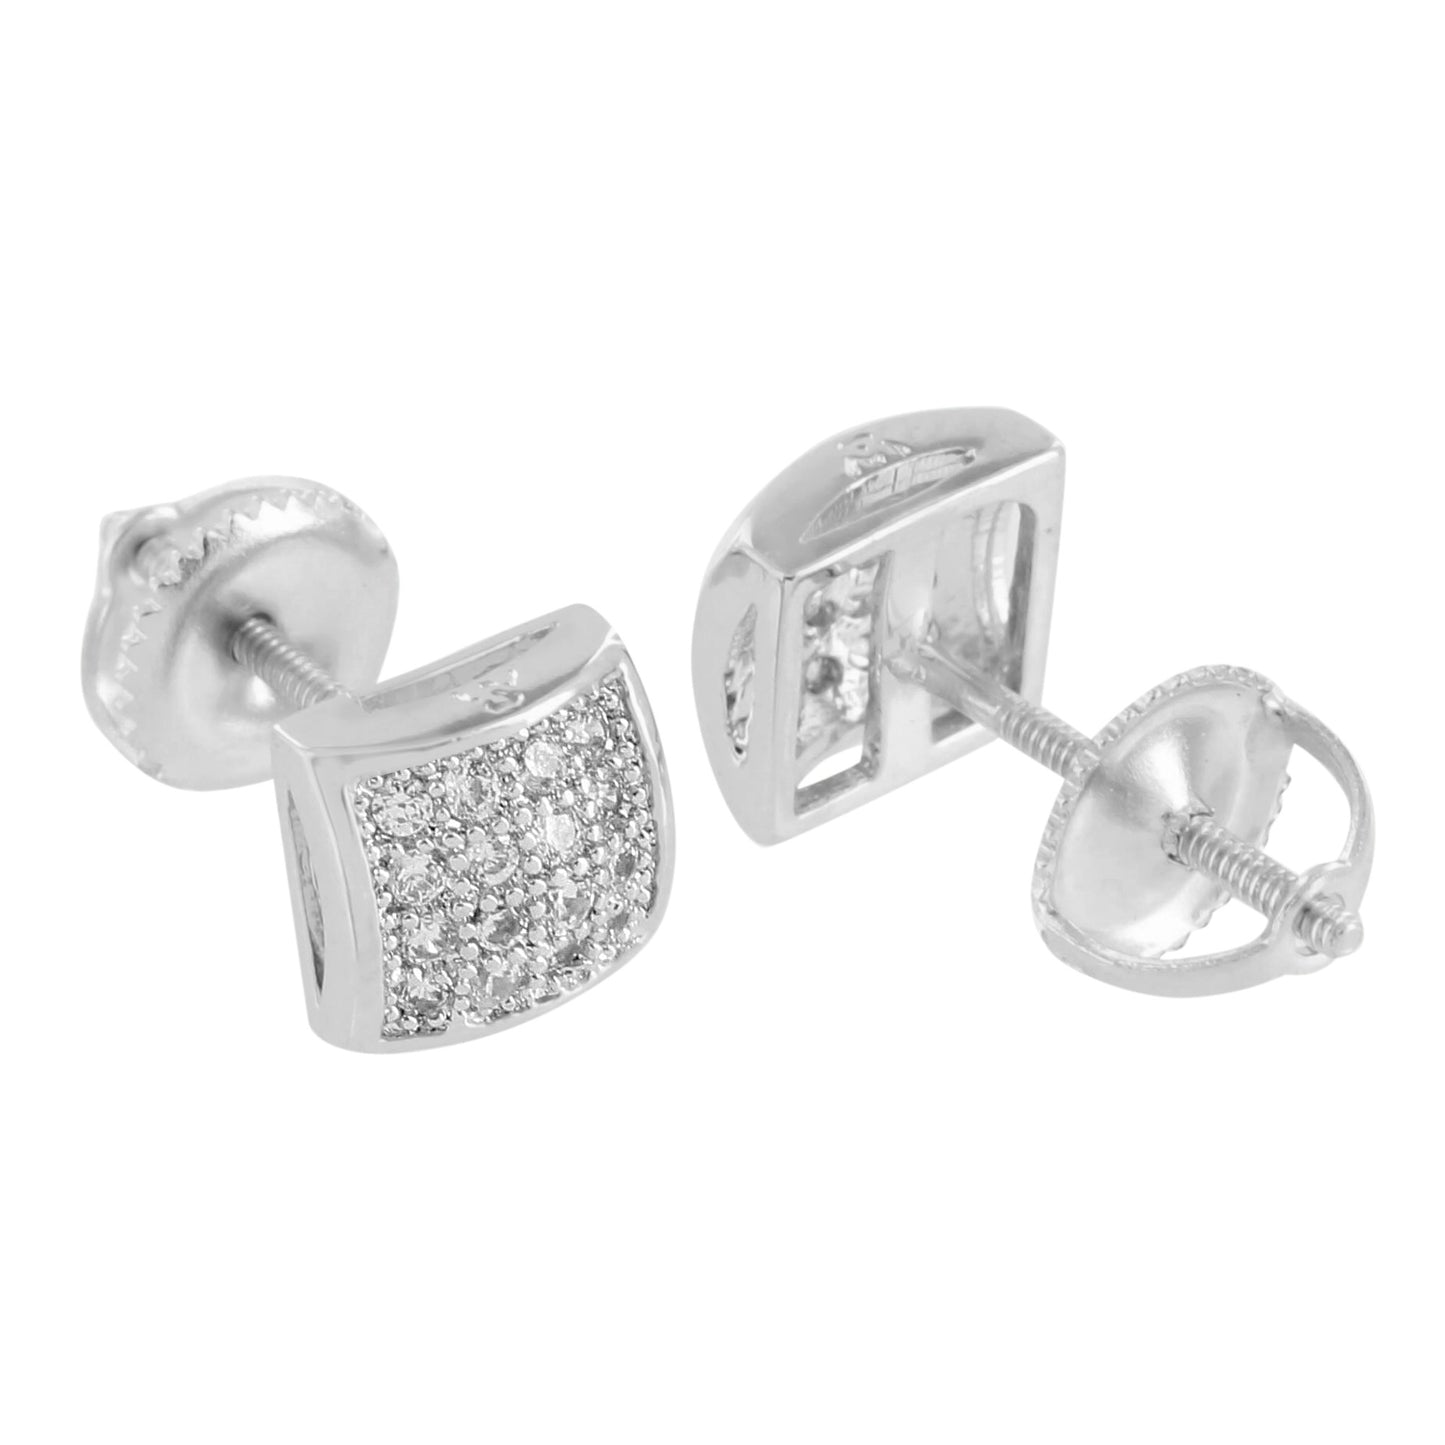 Mens White Gold Earrings On Sale 14k Finish Screw Back Lock Lab Diamonds